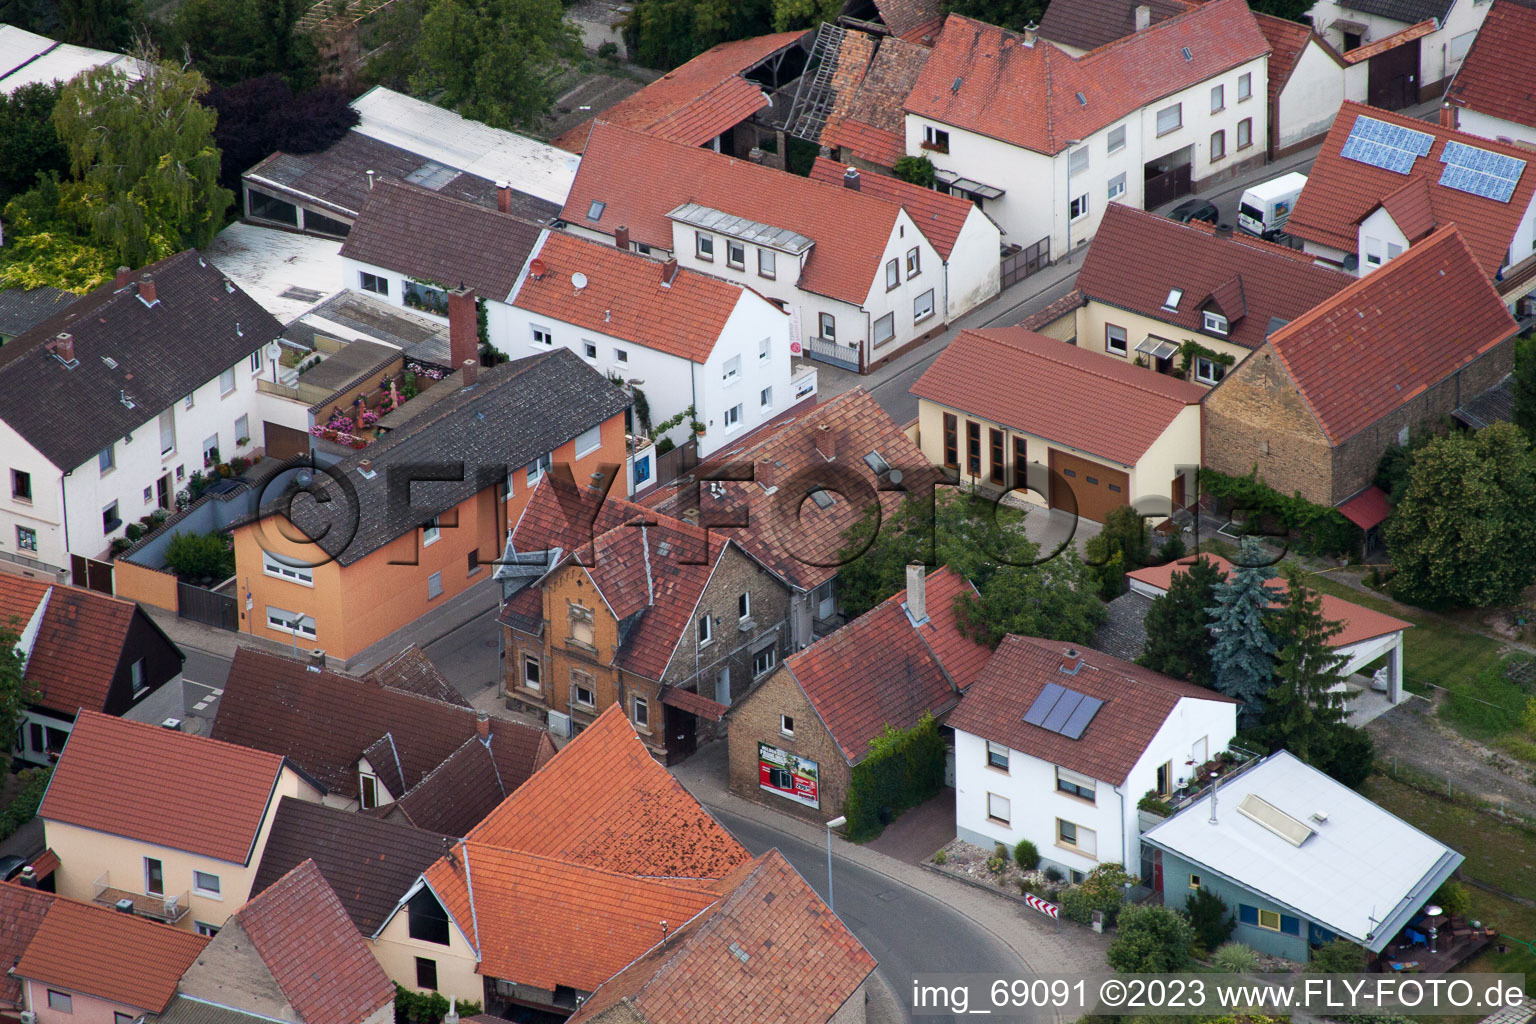 District Bobenheim in Bobenheim-Roxheim in the state Rhineland-Palatinate, Germany from the plane